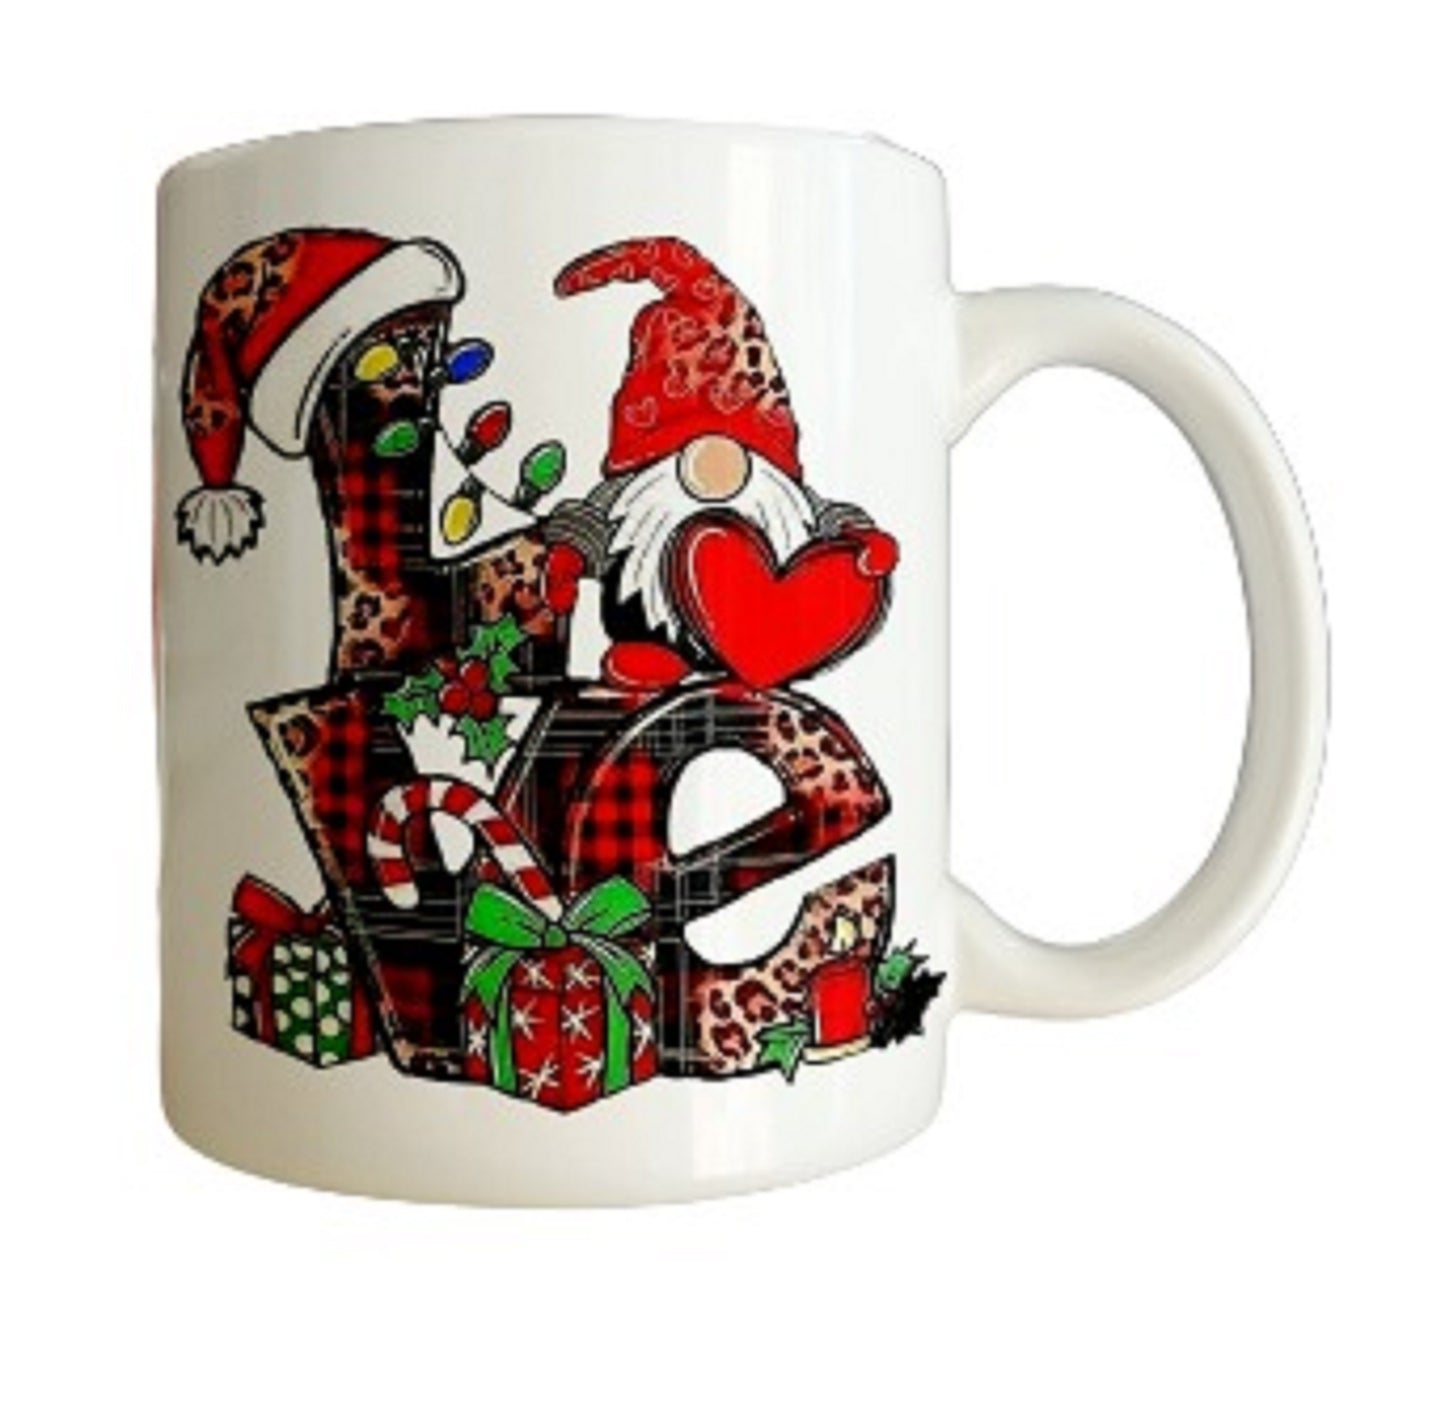  Gnome Love Christmas Coffee Mug by Free Spirit Accessories sold by Free Spirit Accessories